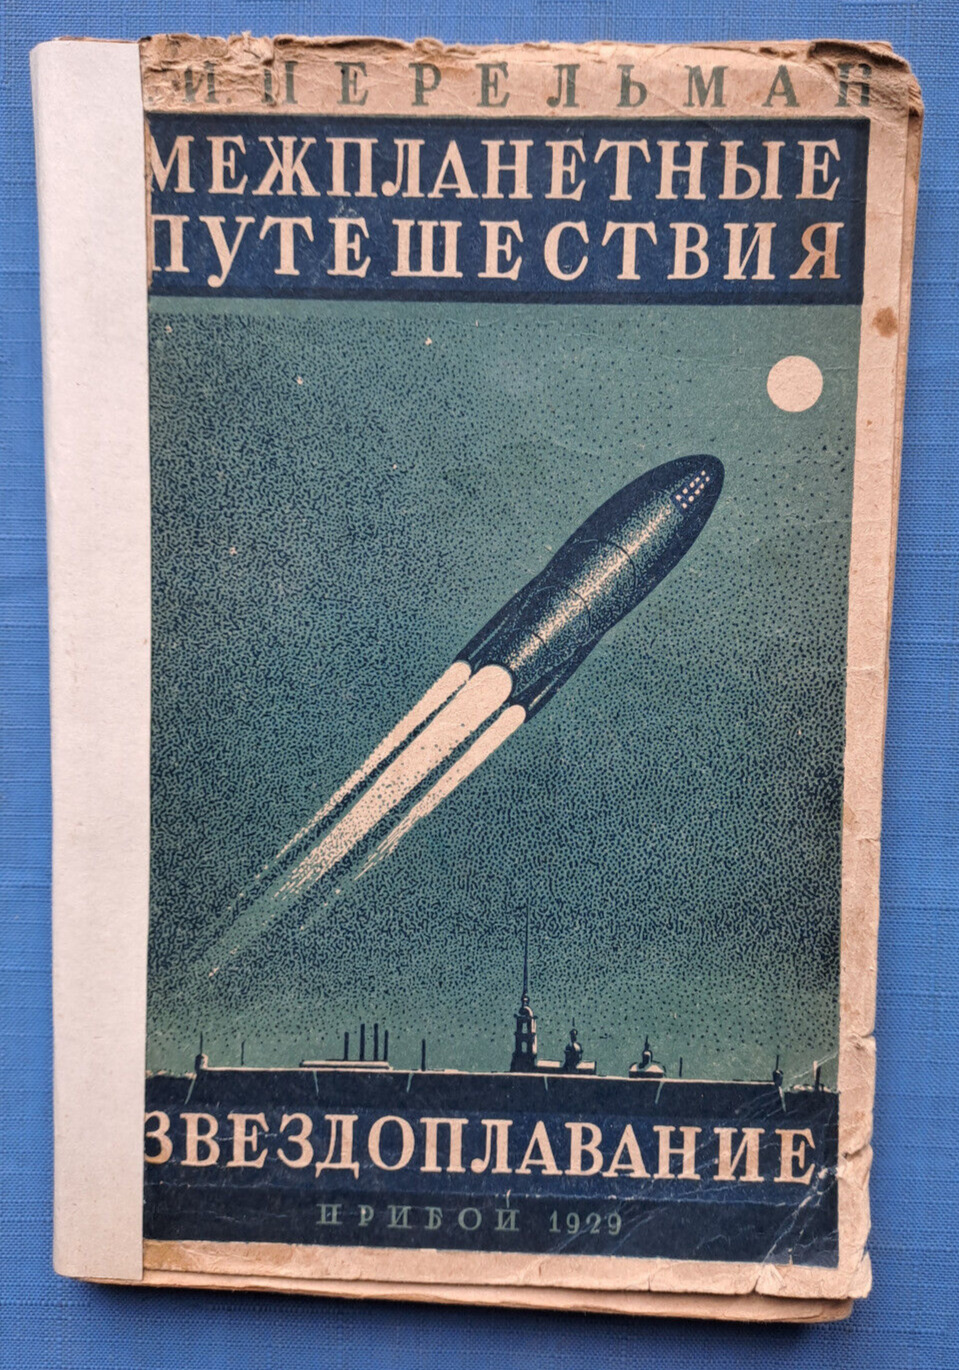 1929 Interplanetary Travel Star navigation Perelman Space Rocket Russian book